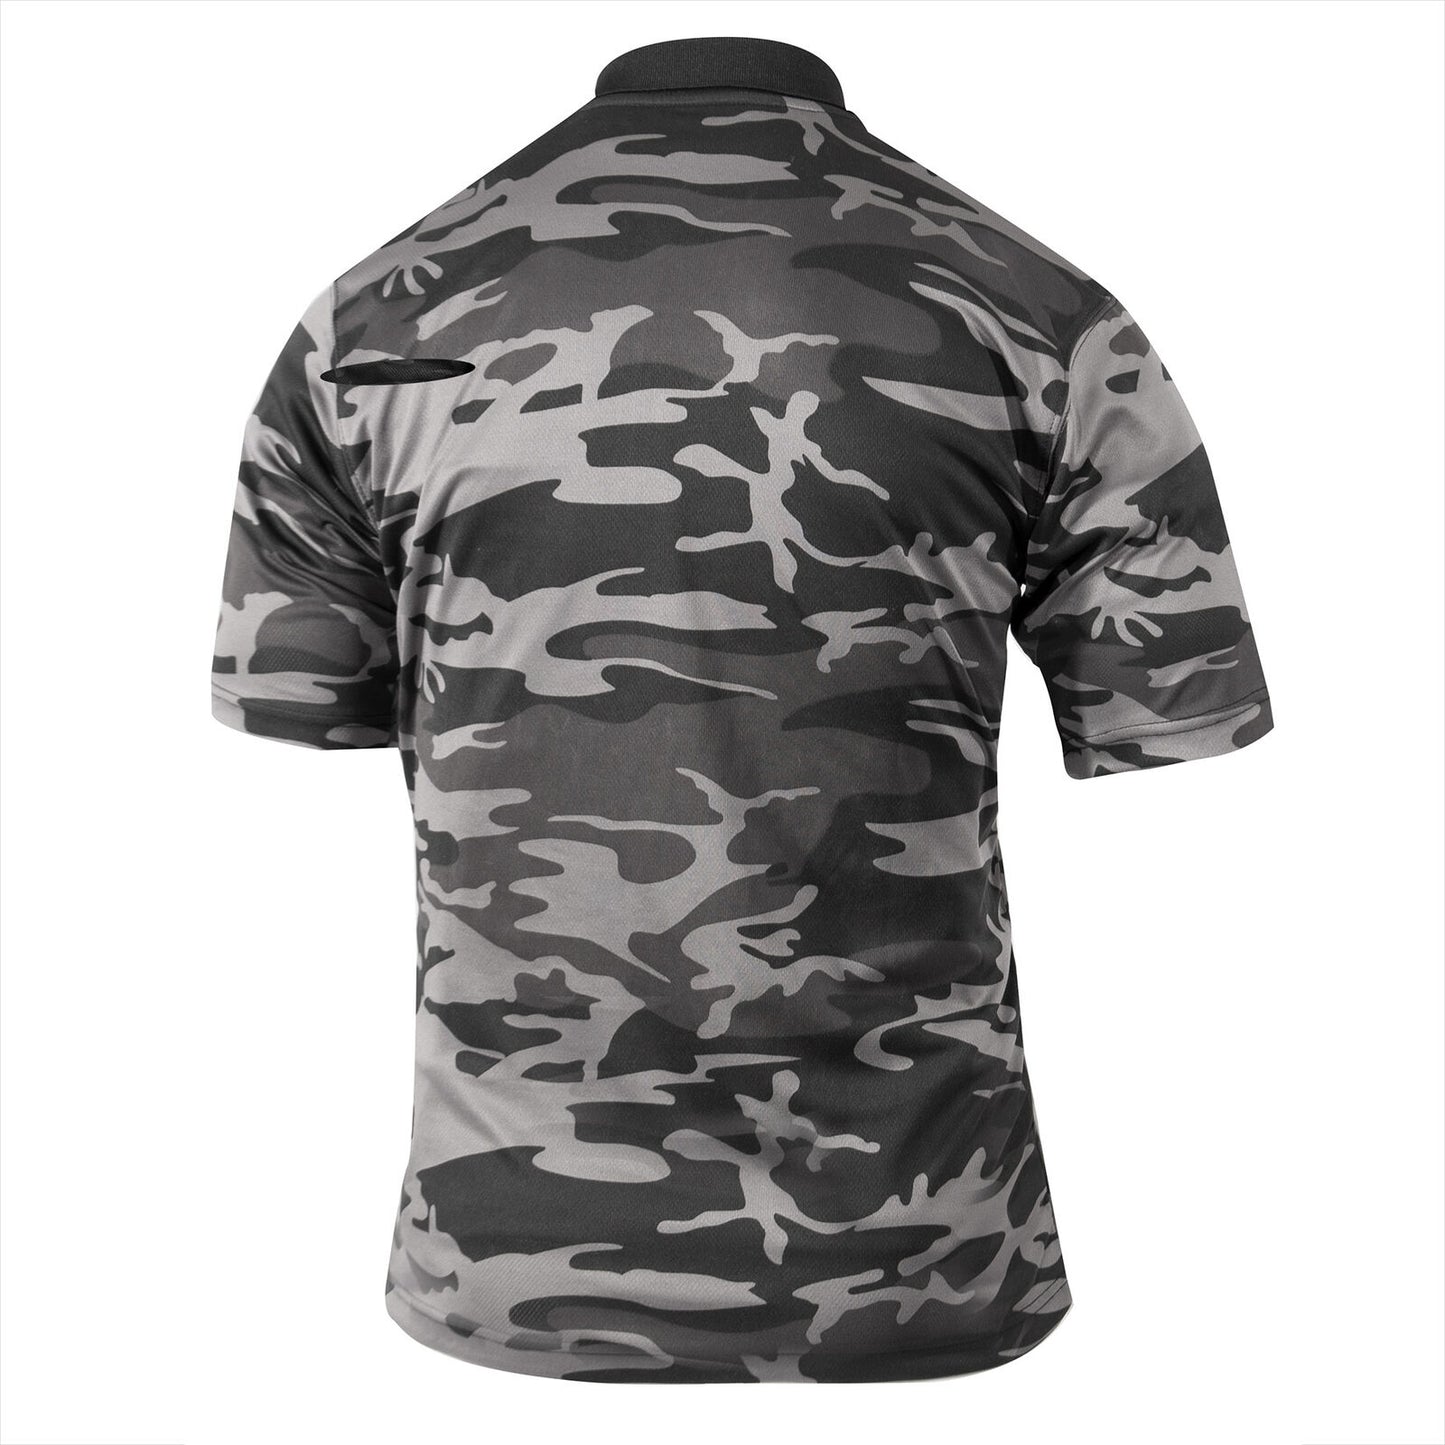 Men's Black Camo Moisture Wicking Polo Short Sleeve Polyester Shirt